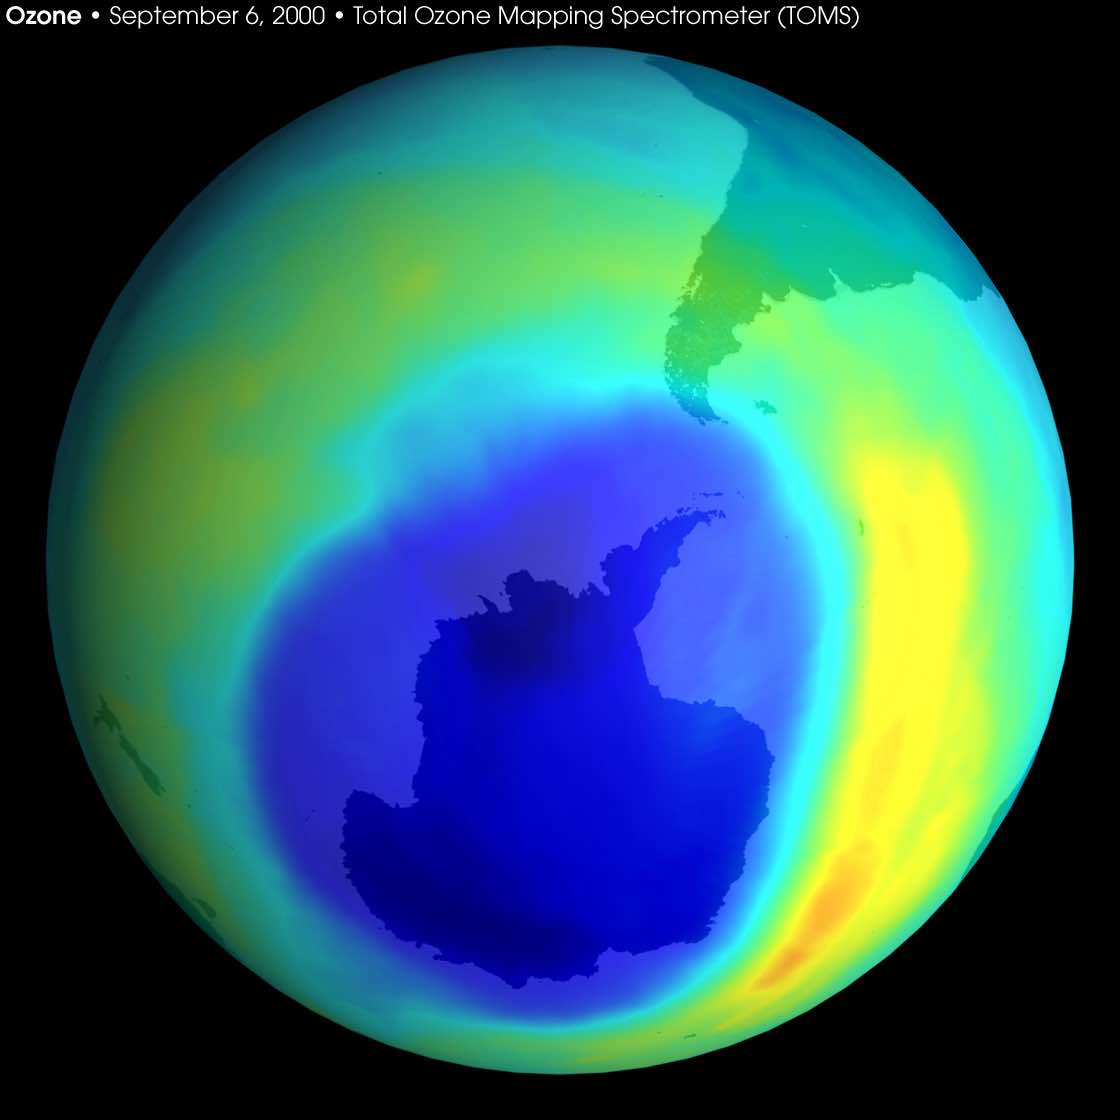 gat in de ozonlaag in september 2000